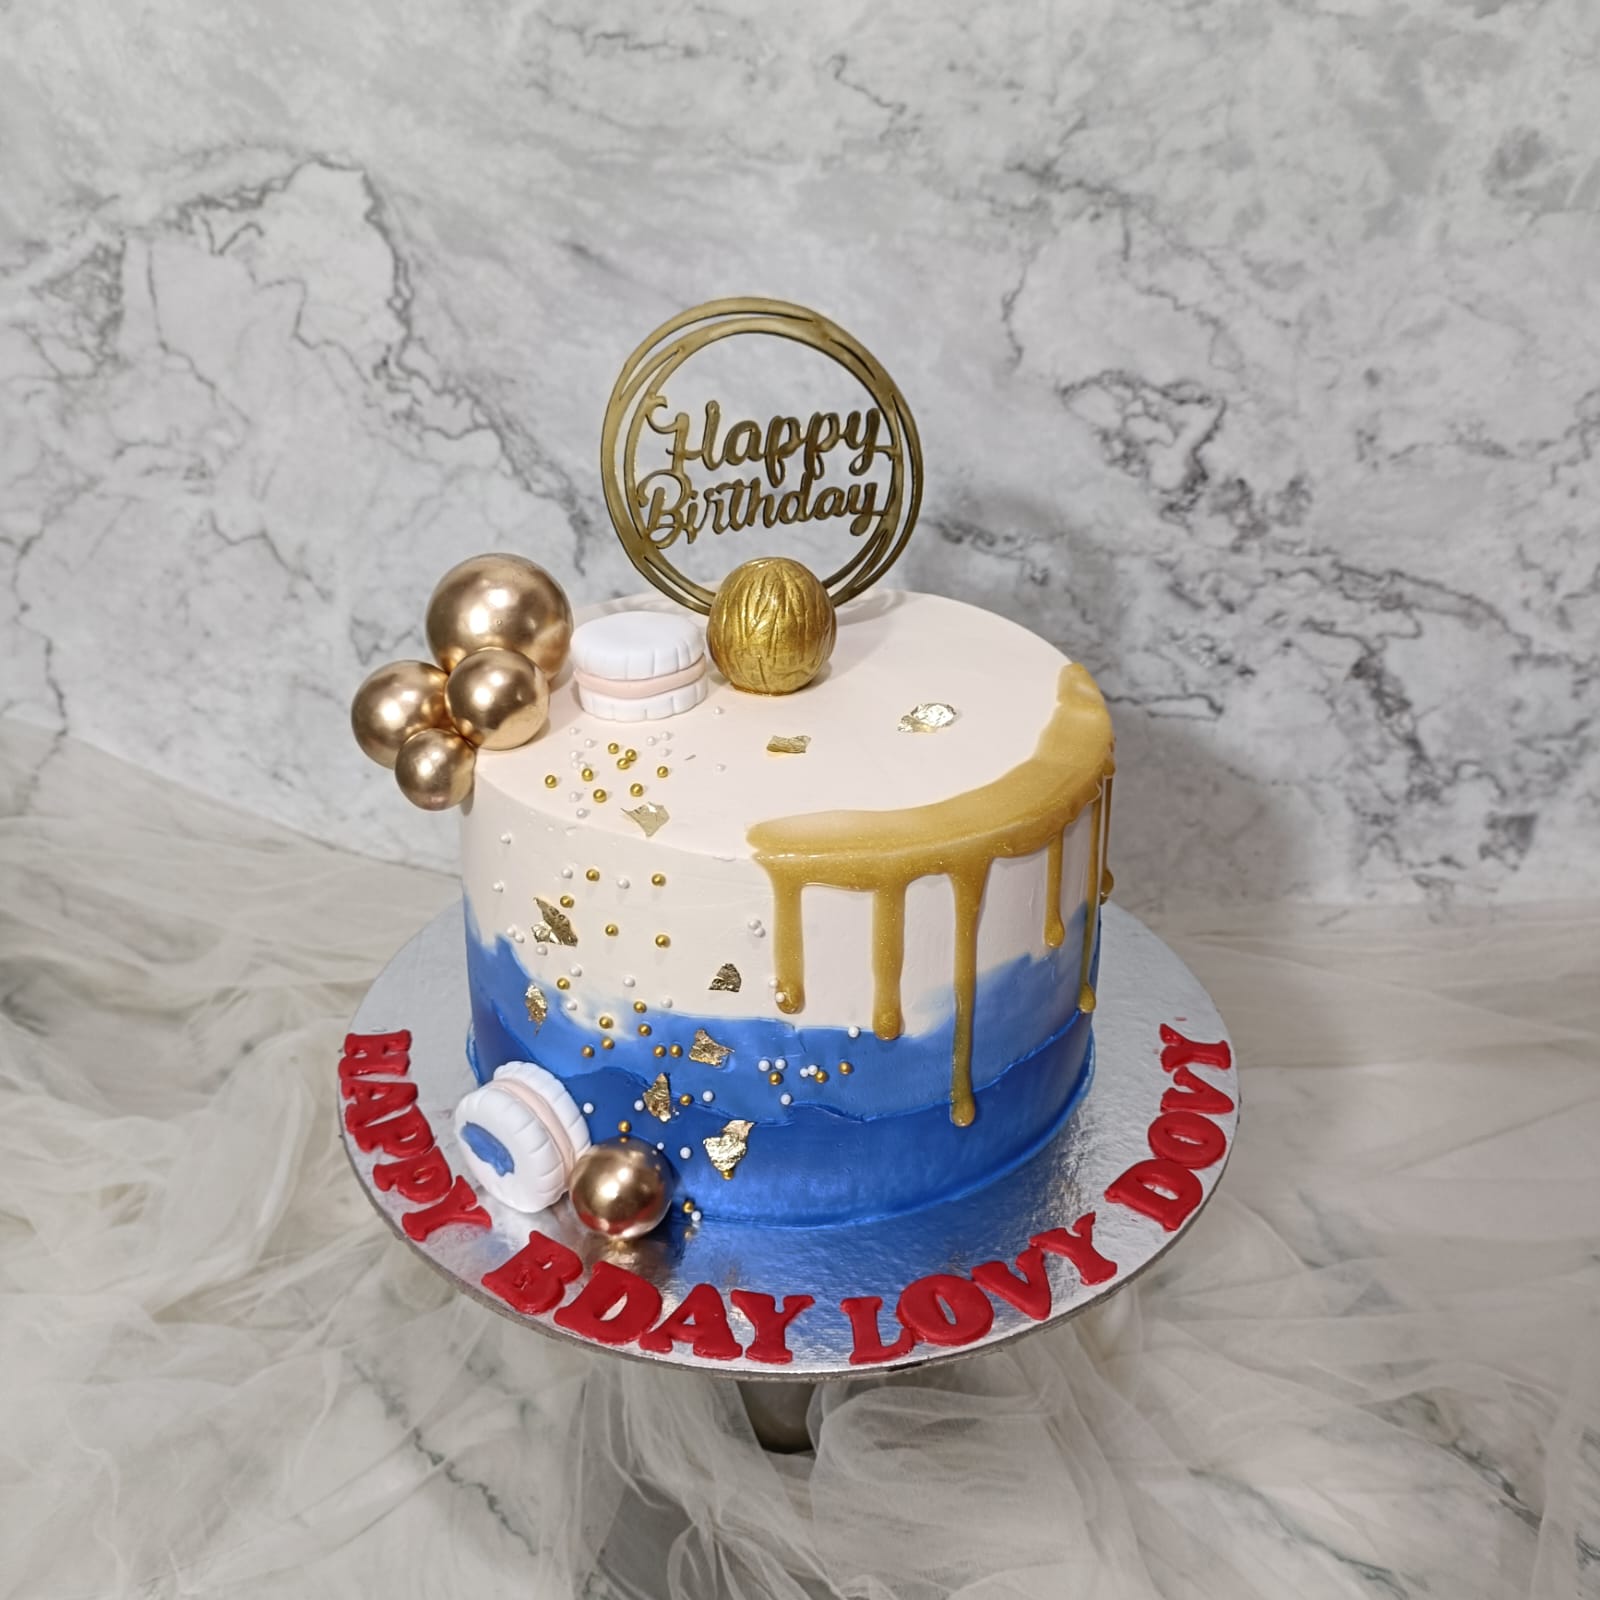 Shop for Fresh Fondant Hearts Birthday Cake online - Dwarka